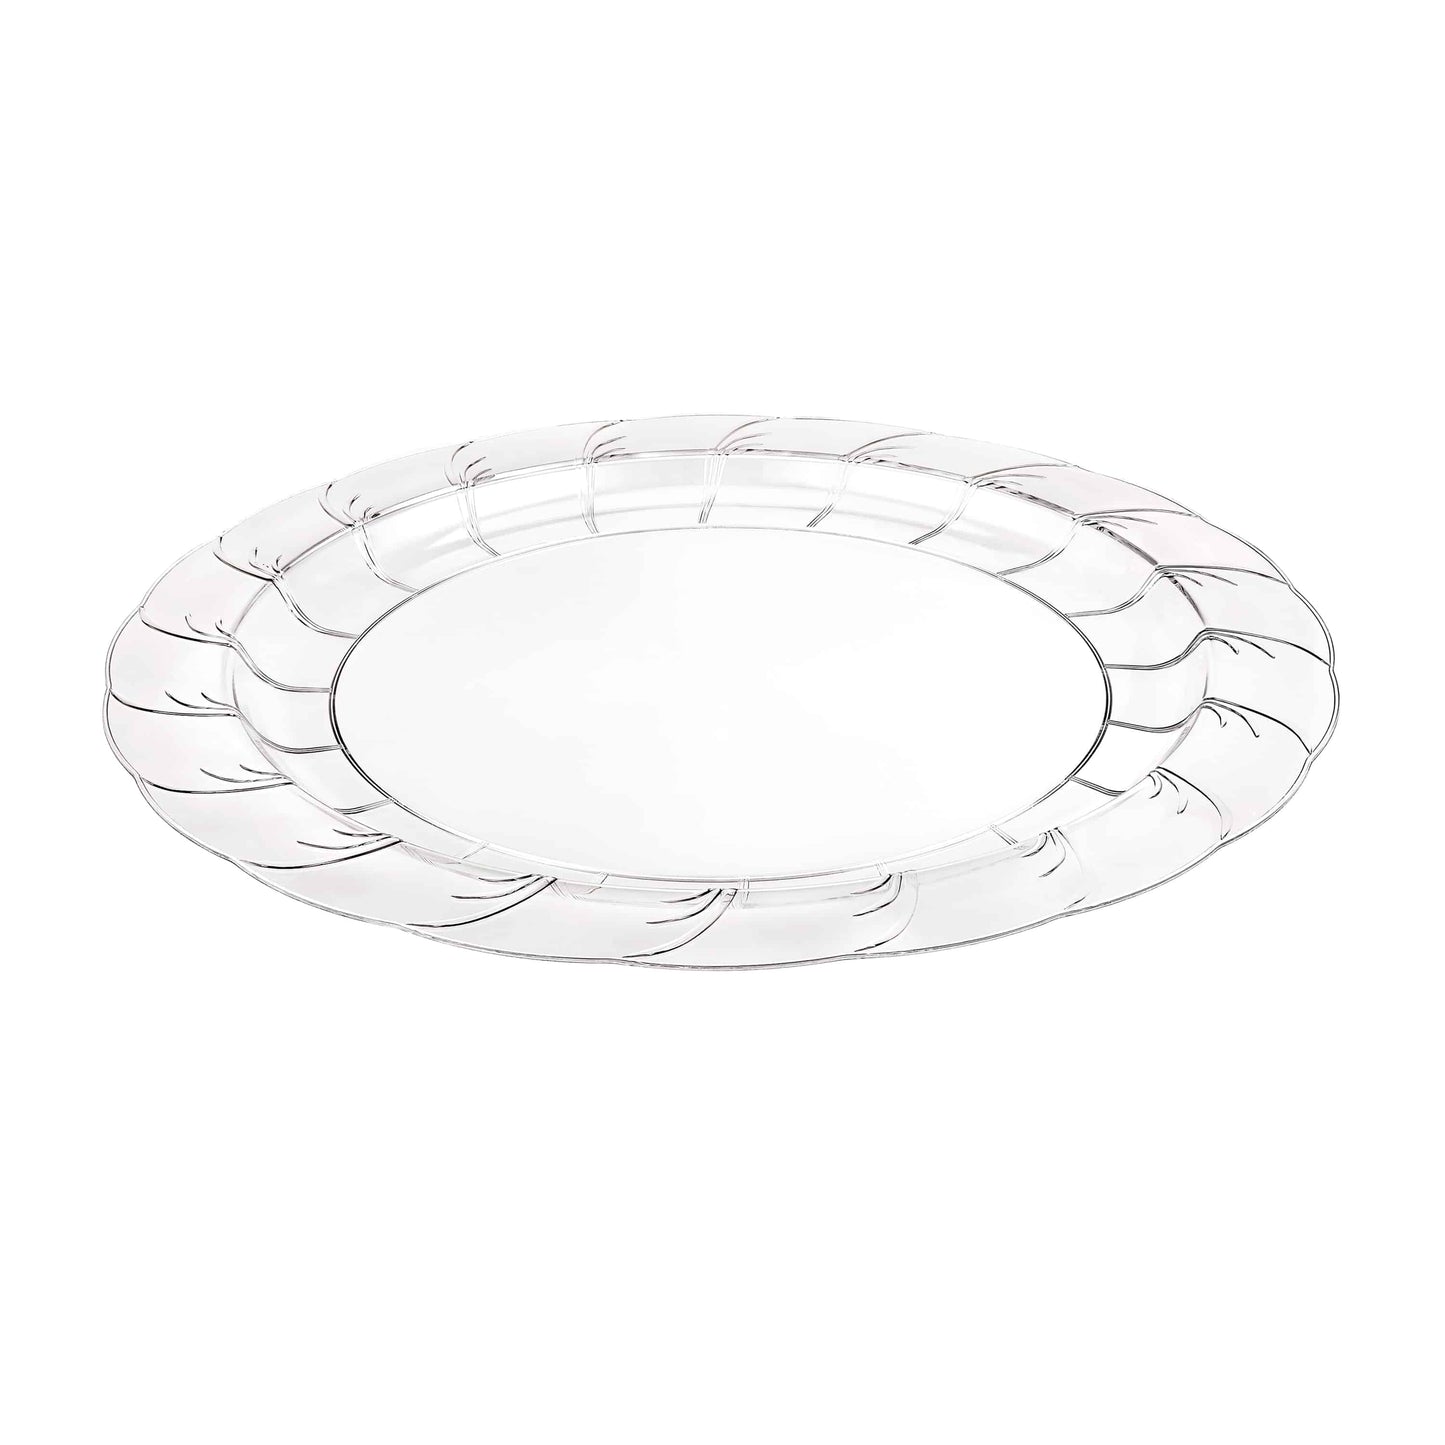 Elegance Premium Clear Plastic Round Dinner Plate